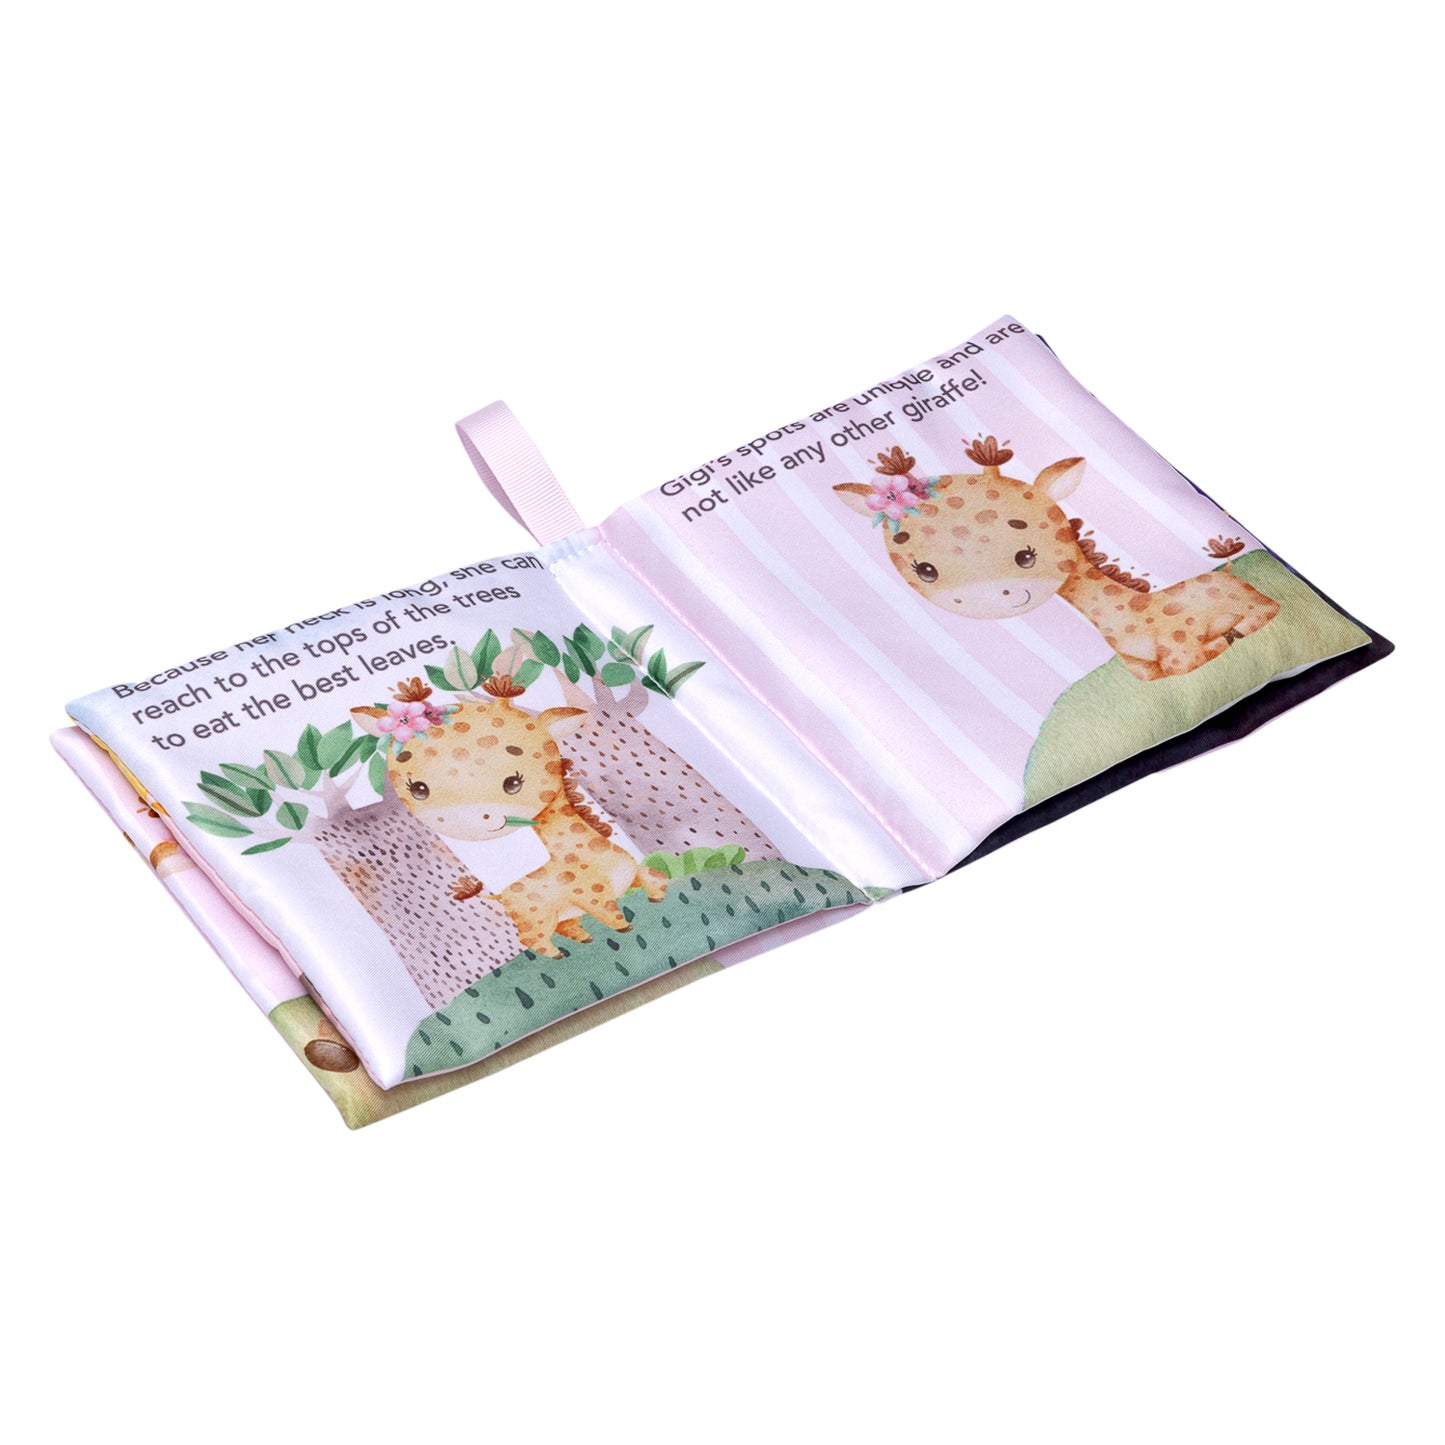 Splosh Baby Cloth Book - Gigi Giraffe